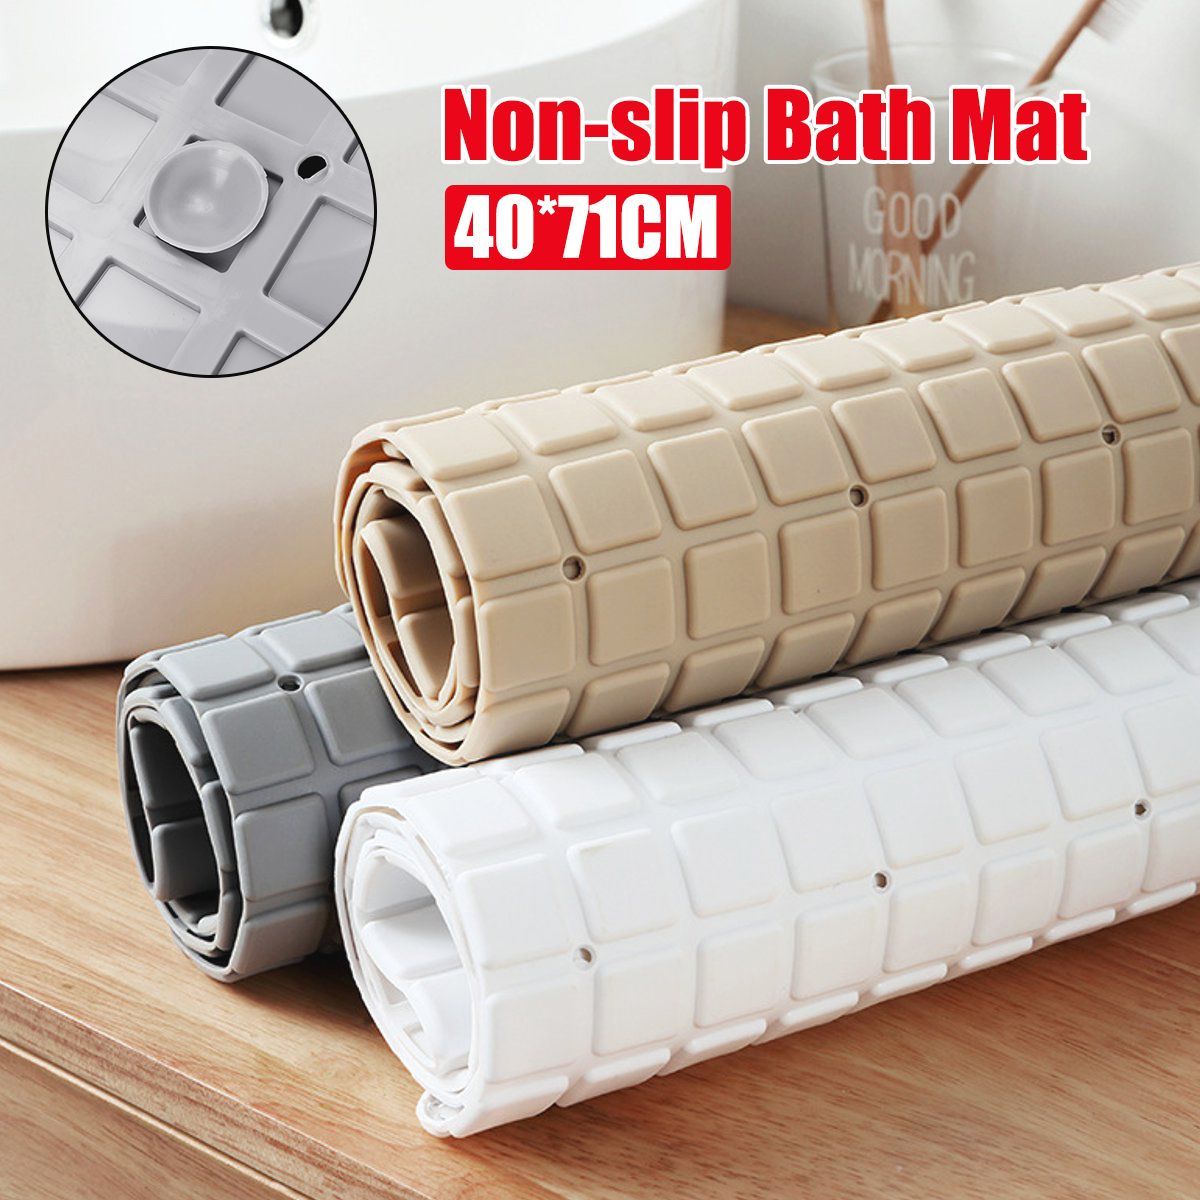 Non-slip-Bath-Shower-Bathtub-Mat-Rubber-Bathroom-Floor-Rug-Massage-Suction-Cup-1563729